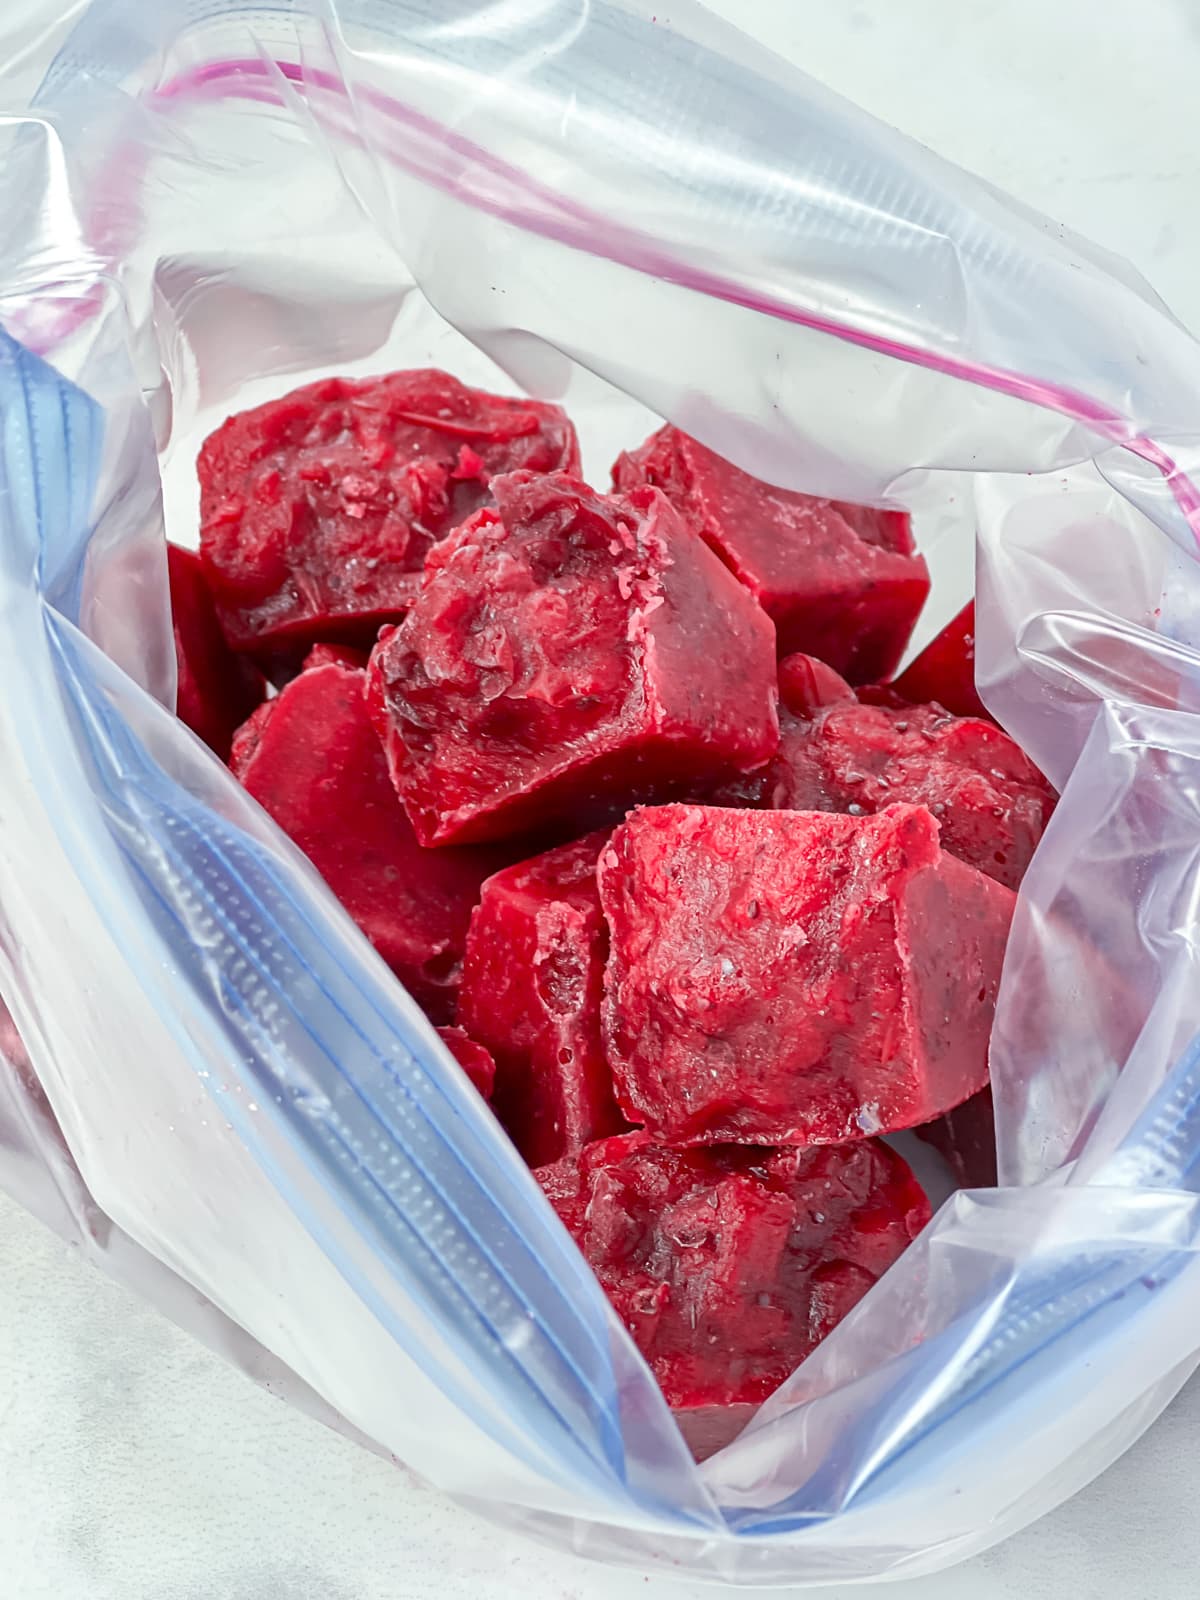 Cranberry sauce ice cubes in a freezer bag.